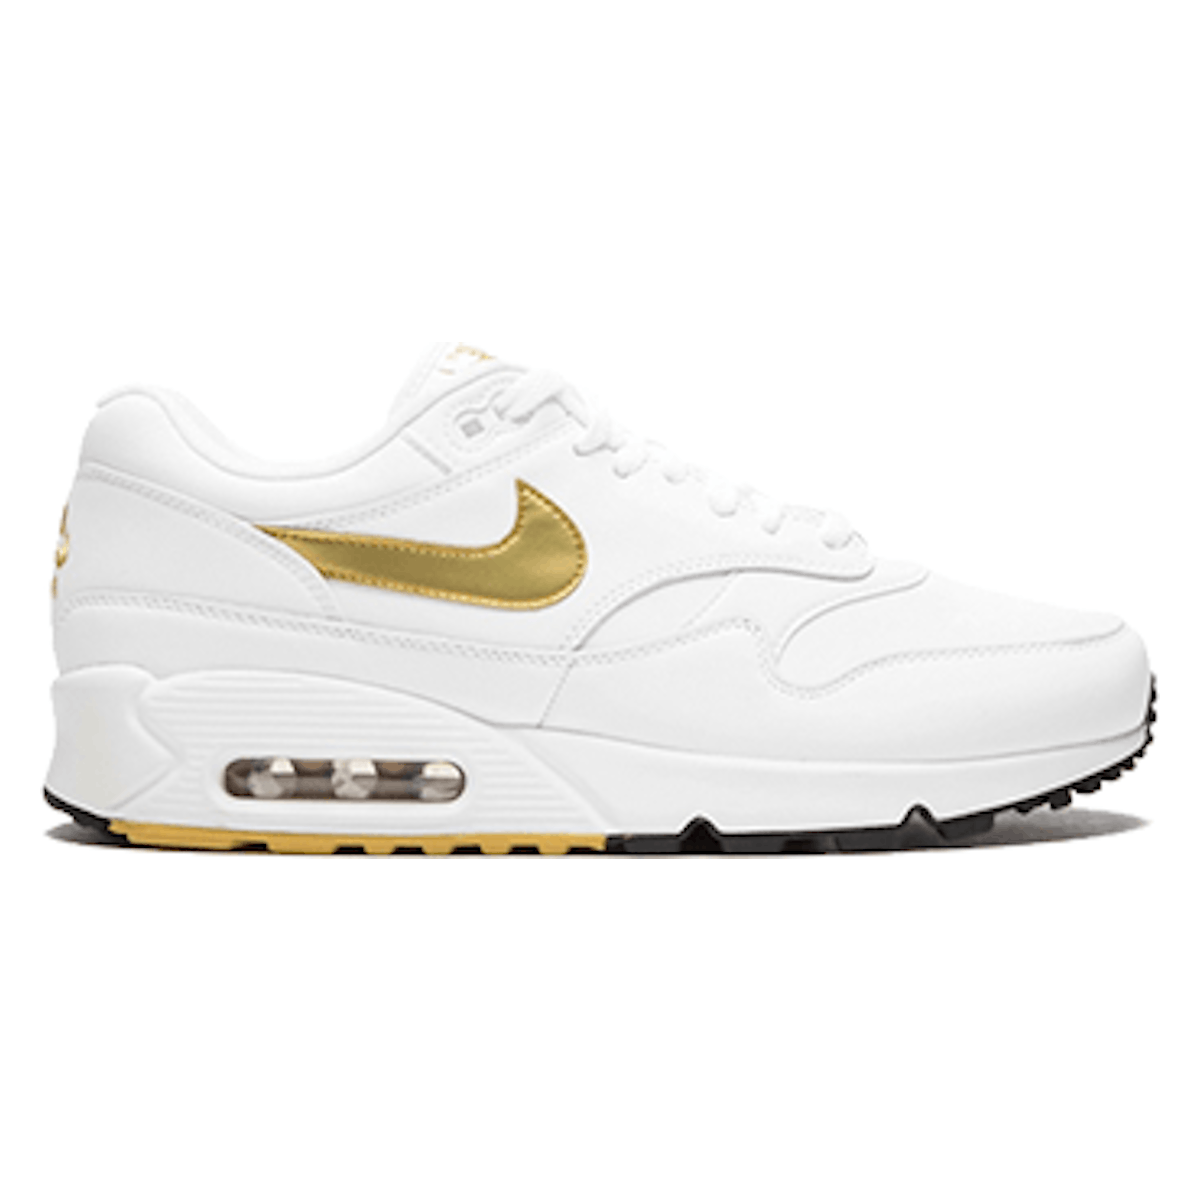 Nike Air Max 90/1 "White/Metallic Gold"